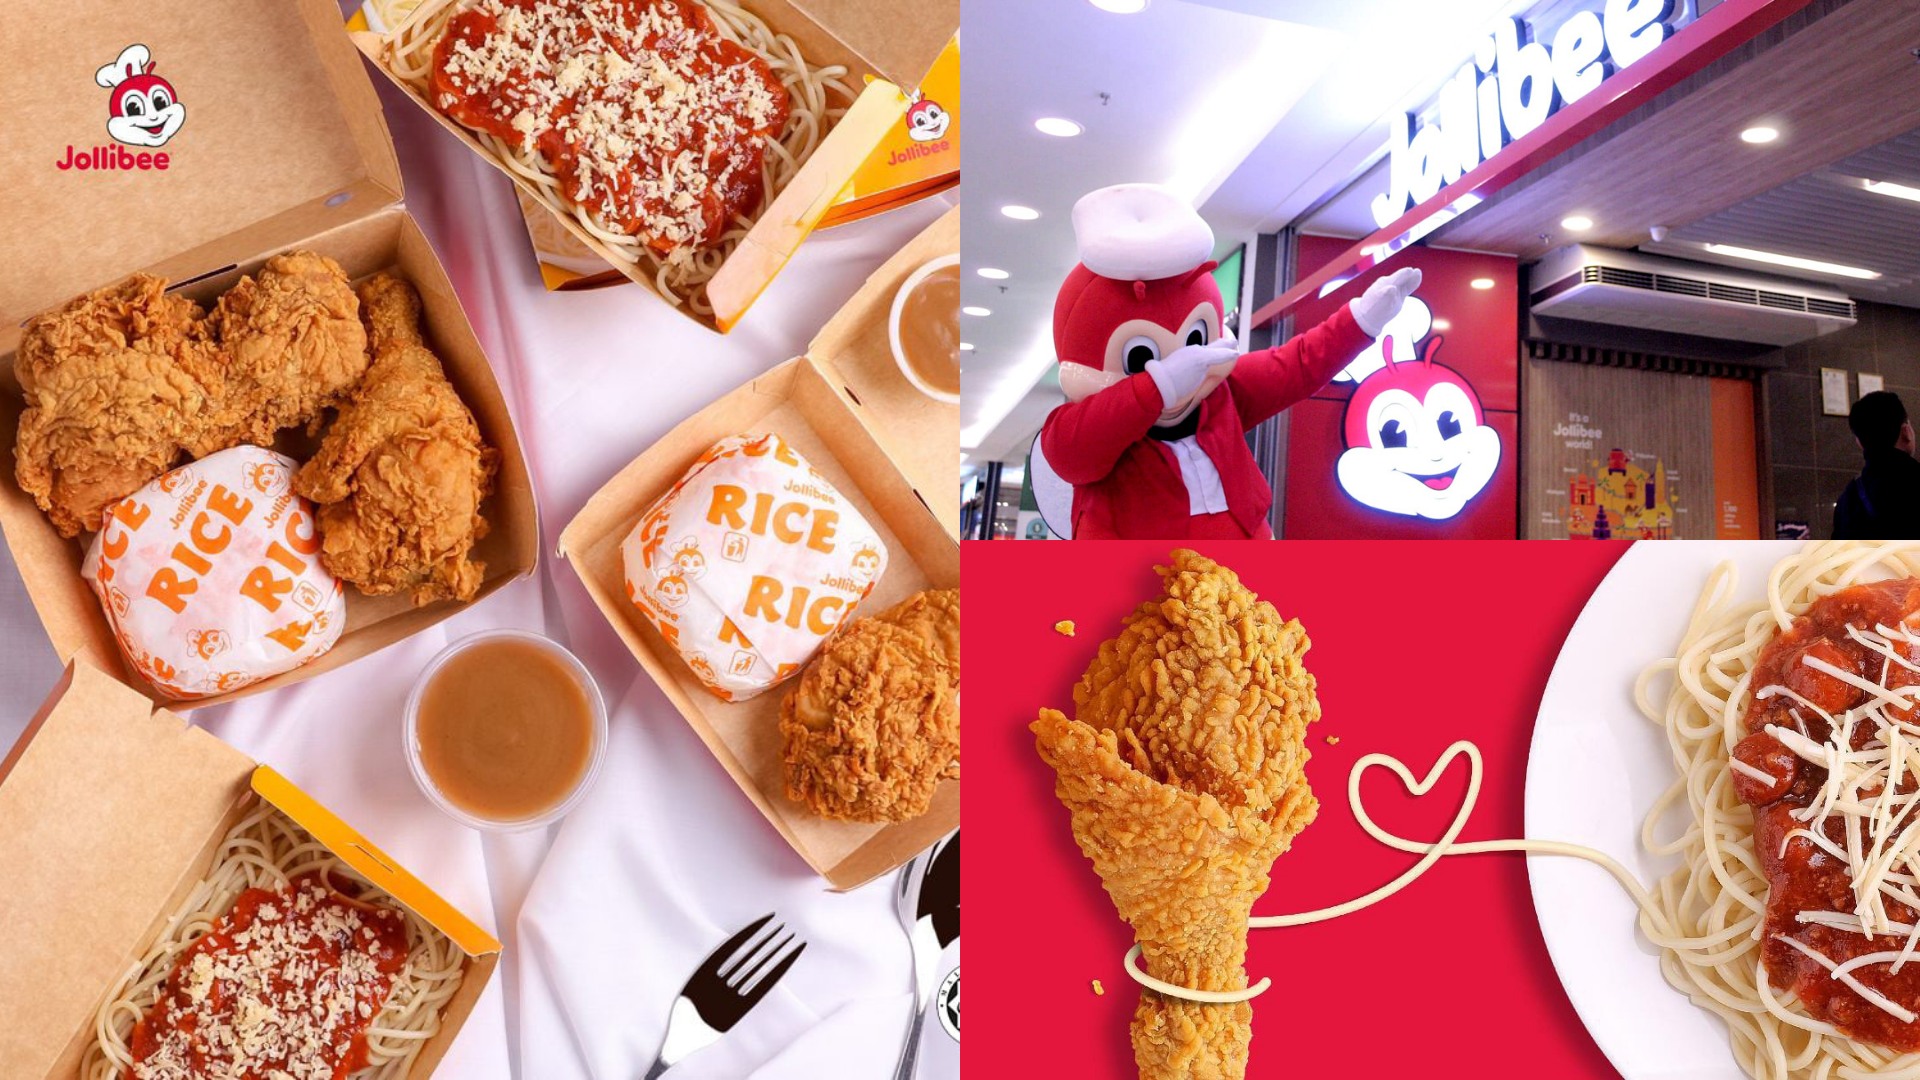 Famous Filipino Fast Food Chain Jollibee To Open 120